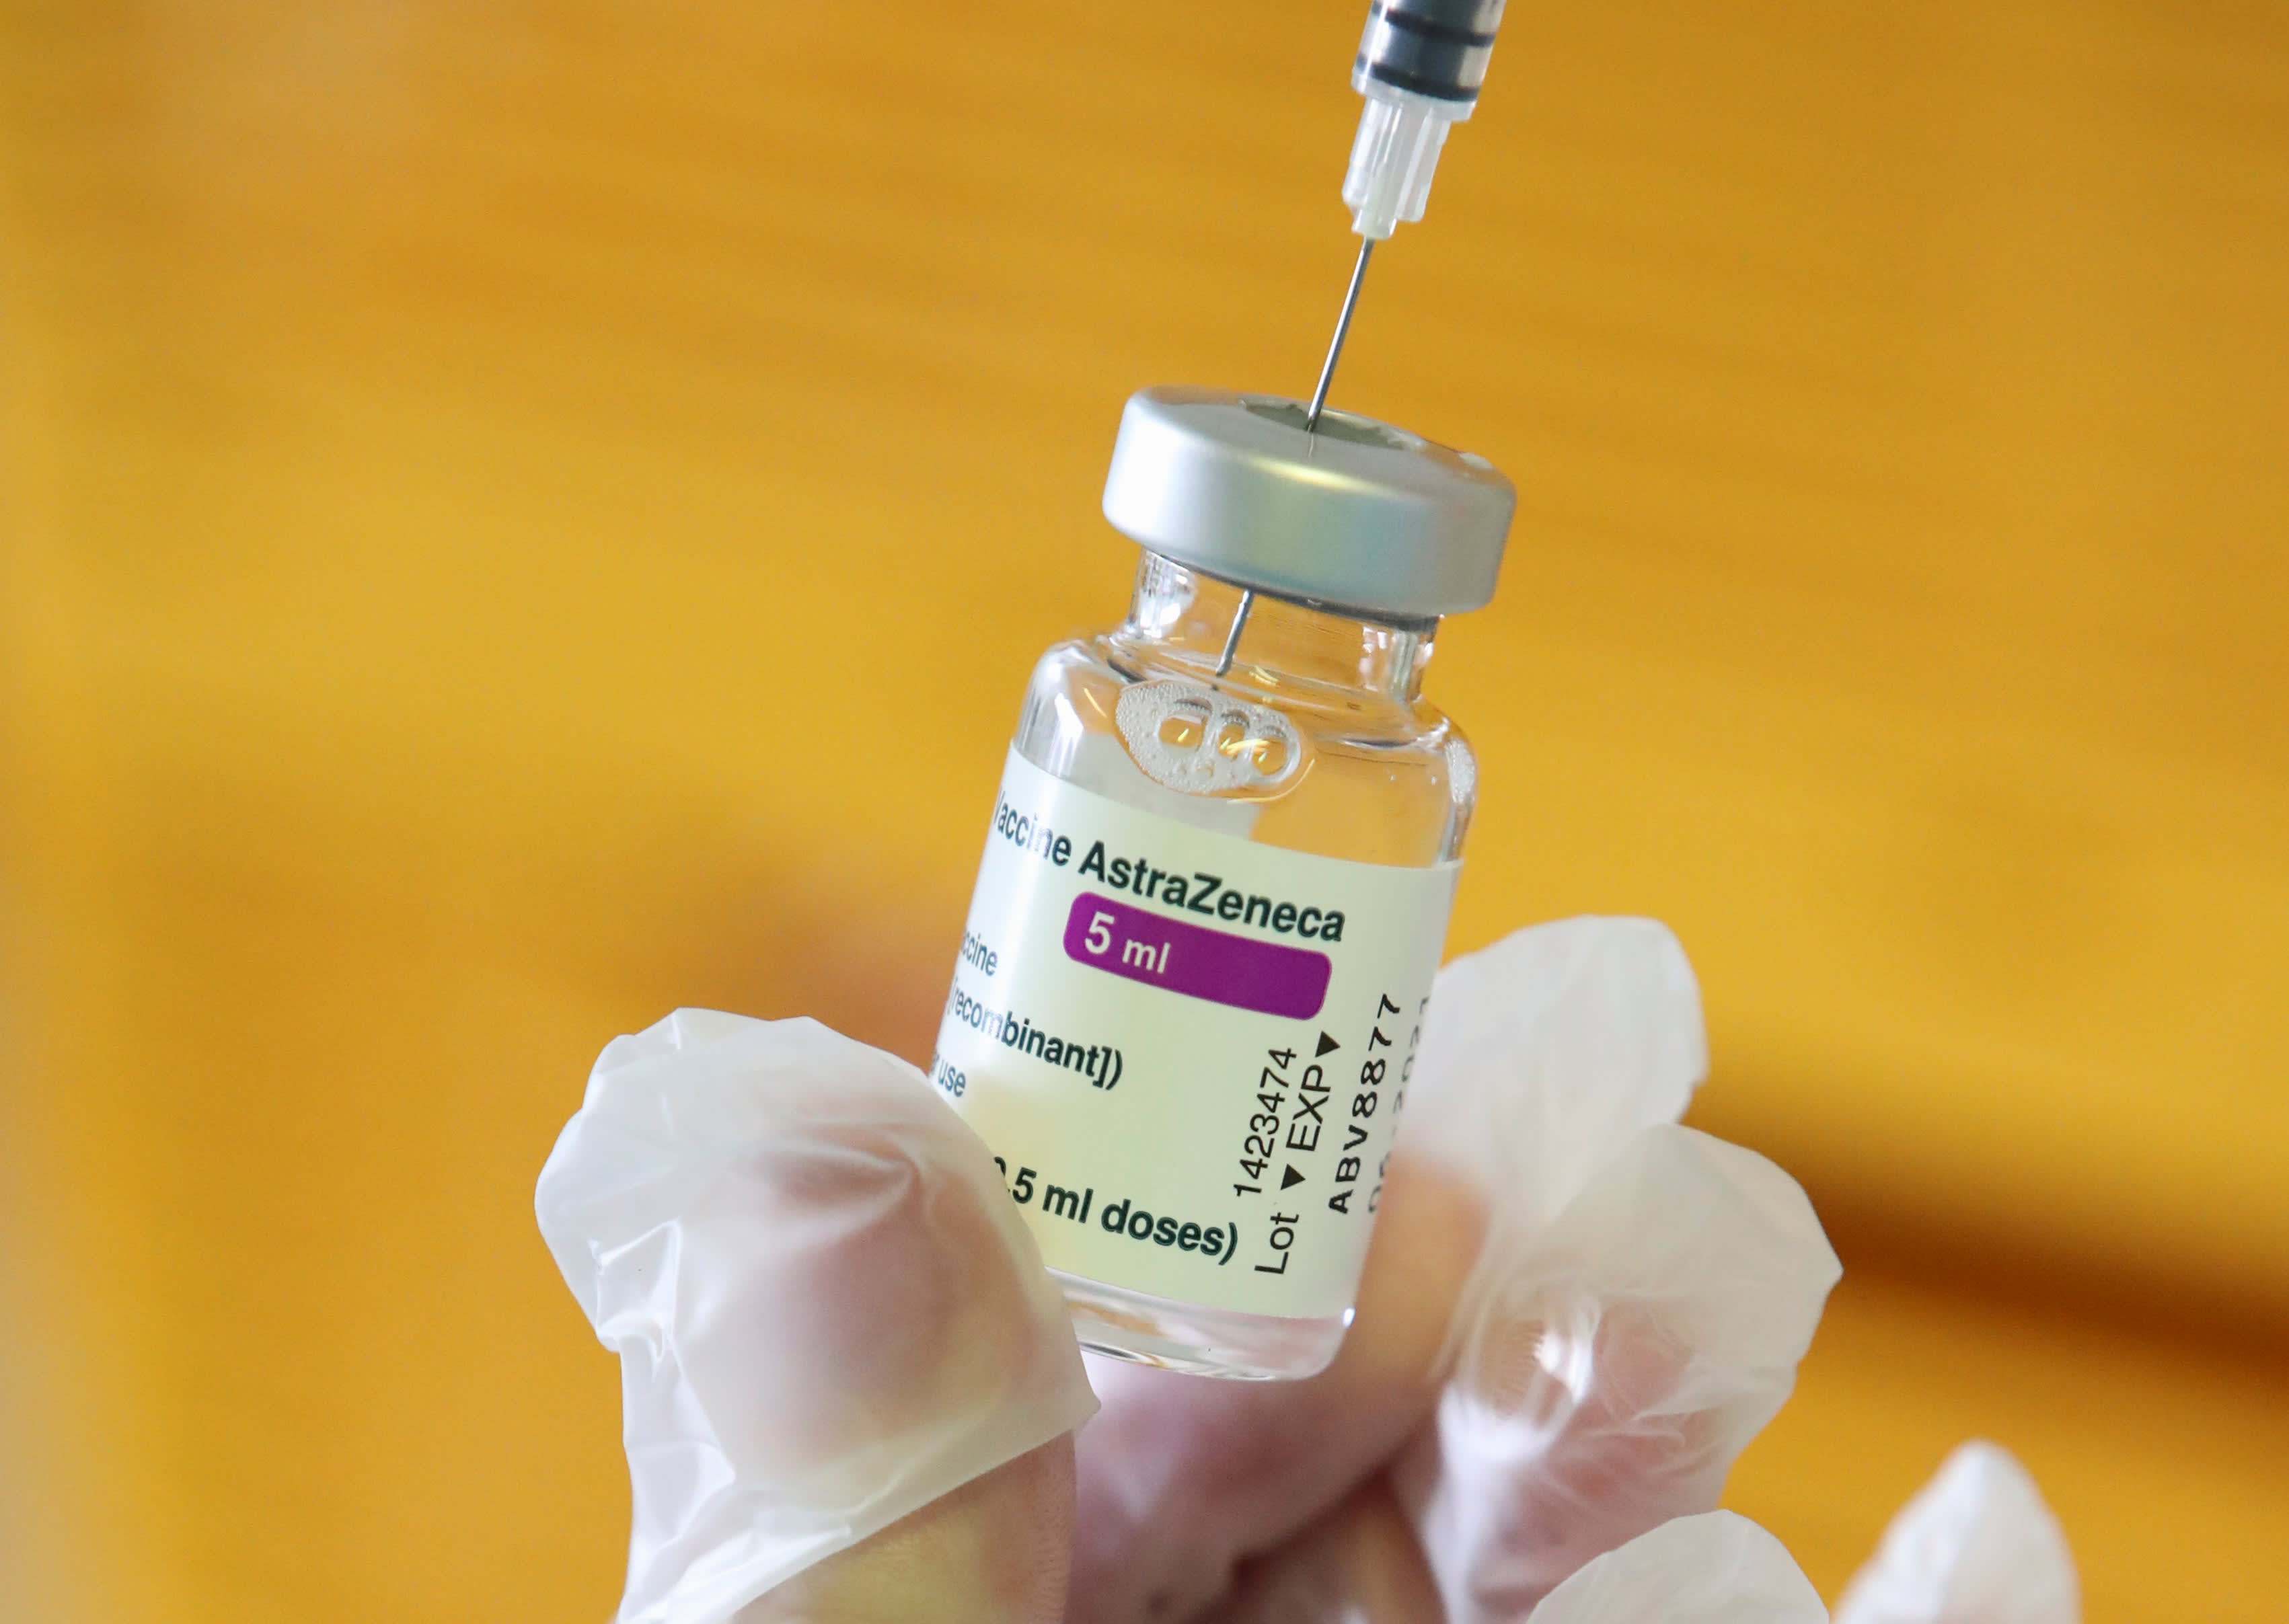 EU prepares legal action against AstraZeneca over vaccine delivery